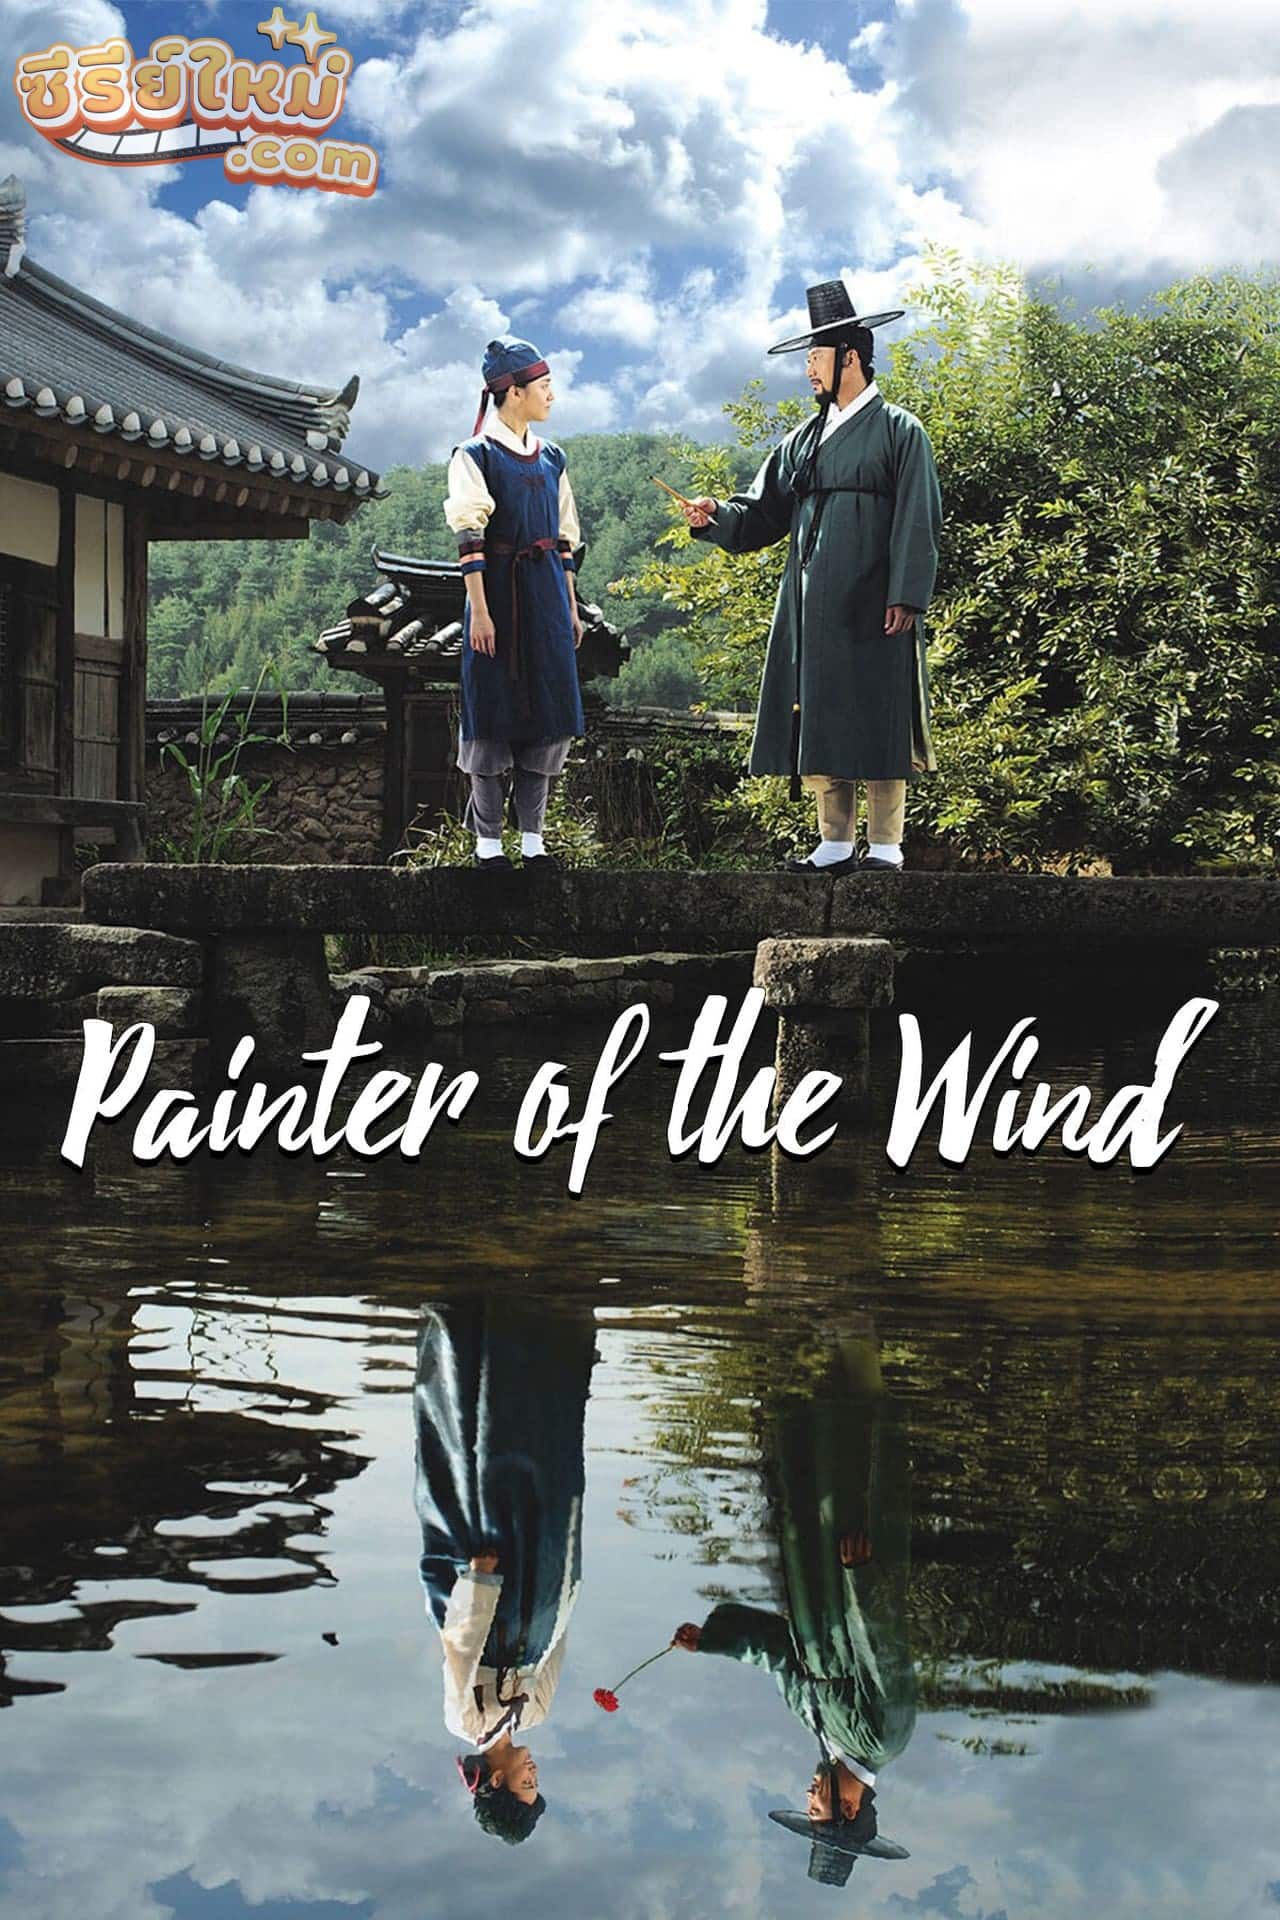 The Painter of the Wind ยอดหญิงตำนานศิลป์ ซินยุนบก (2008)